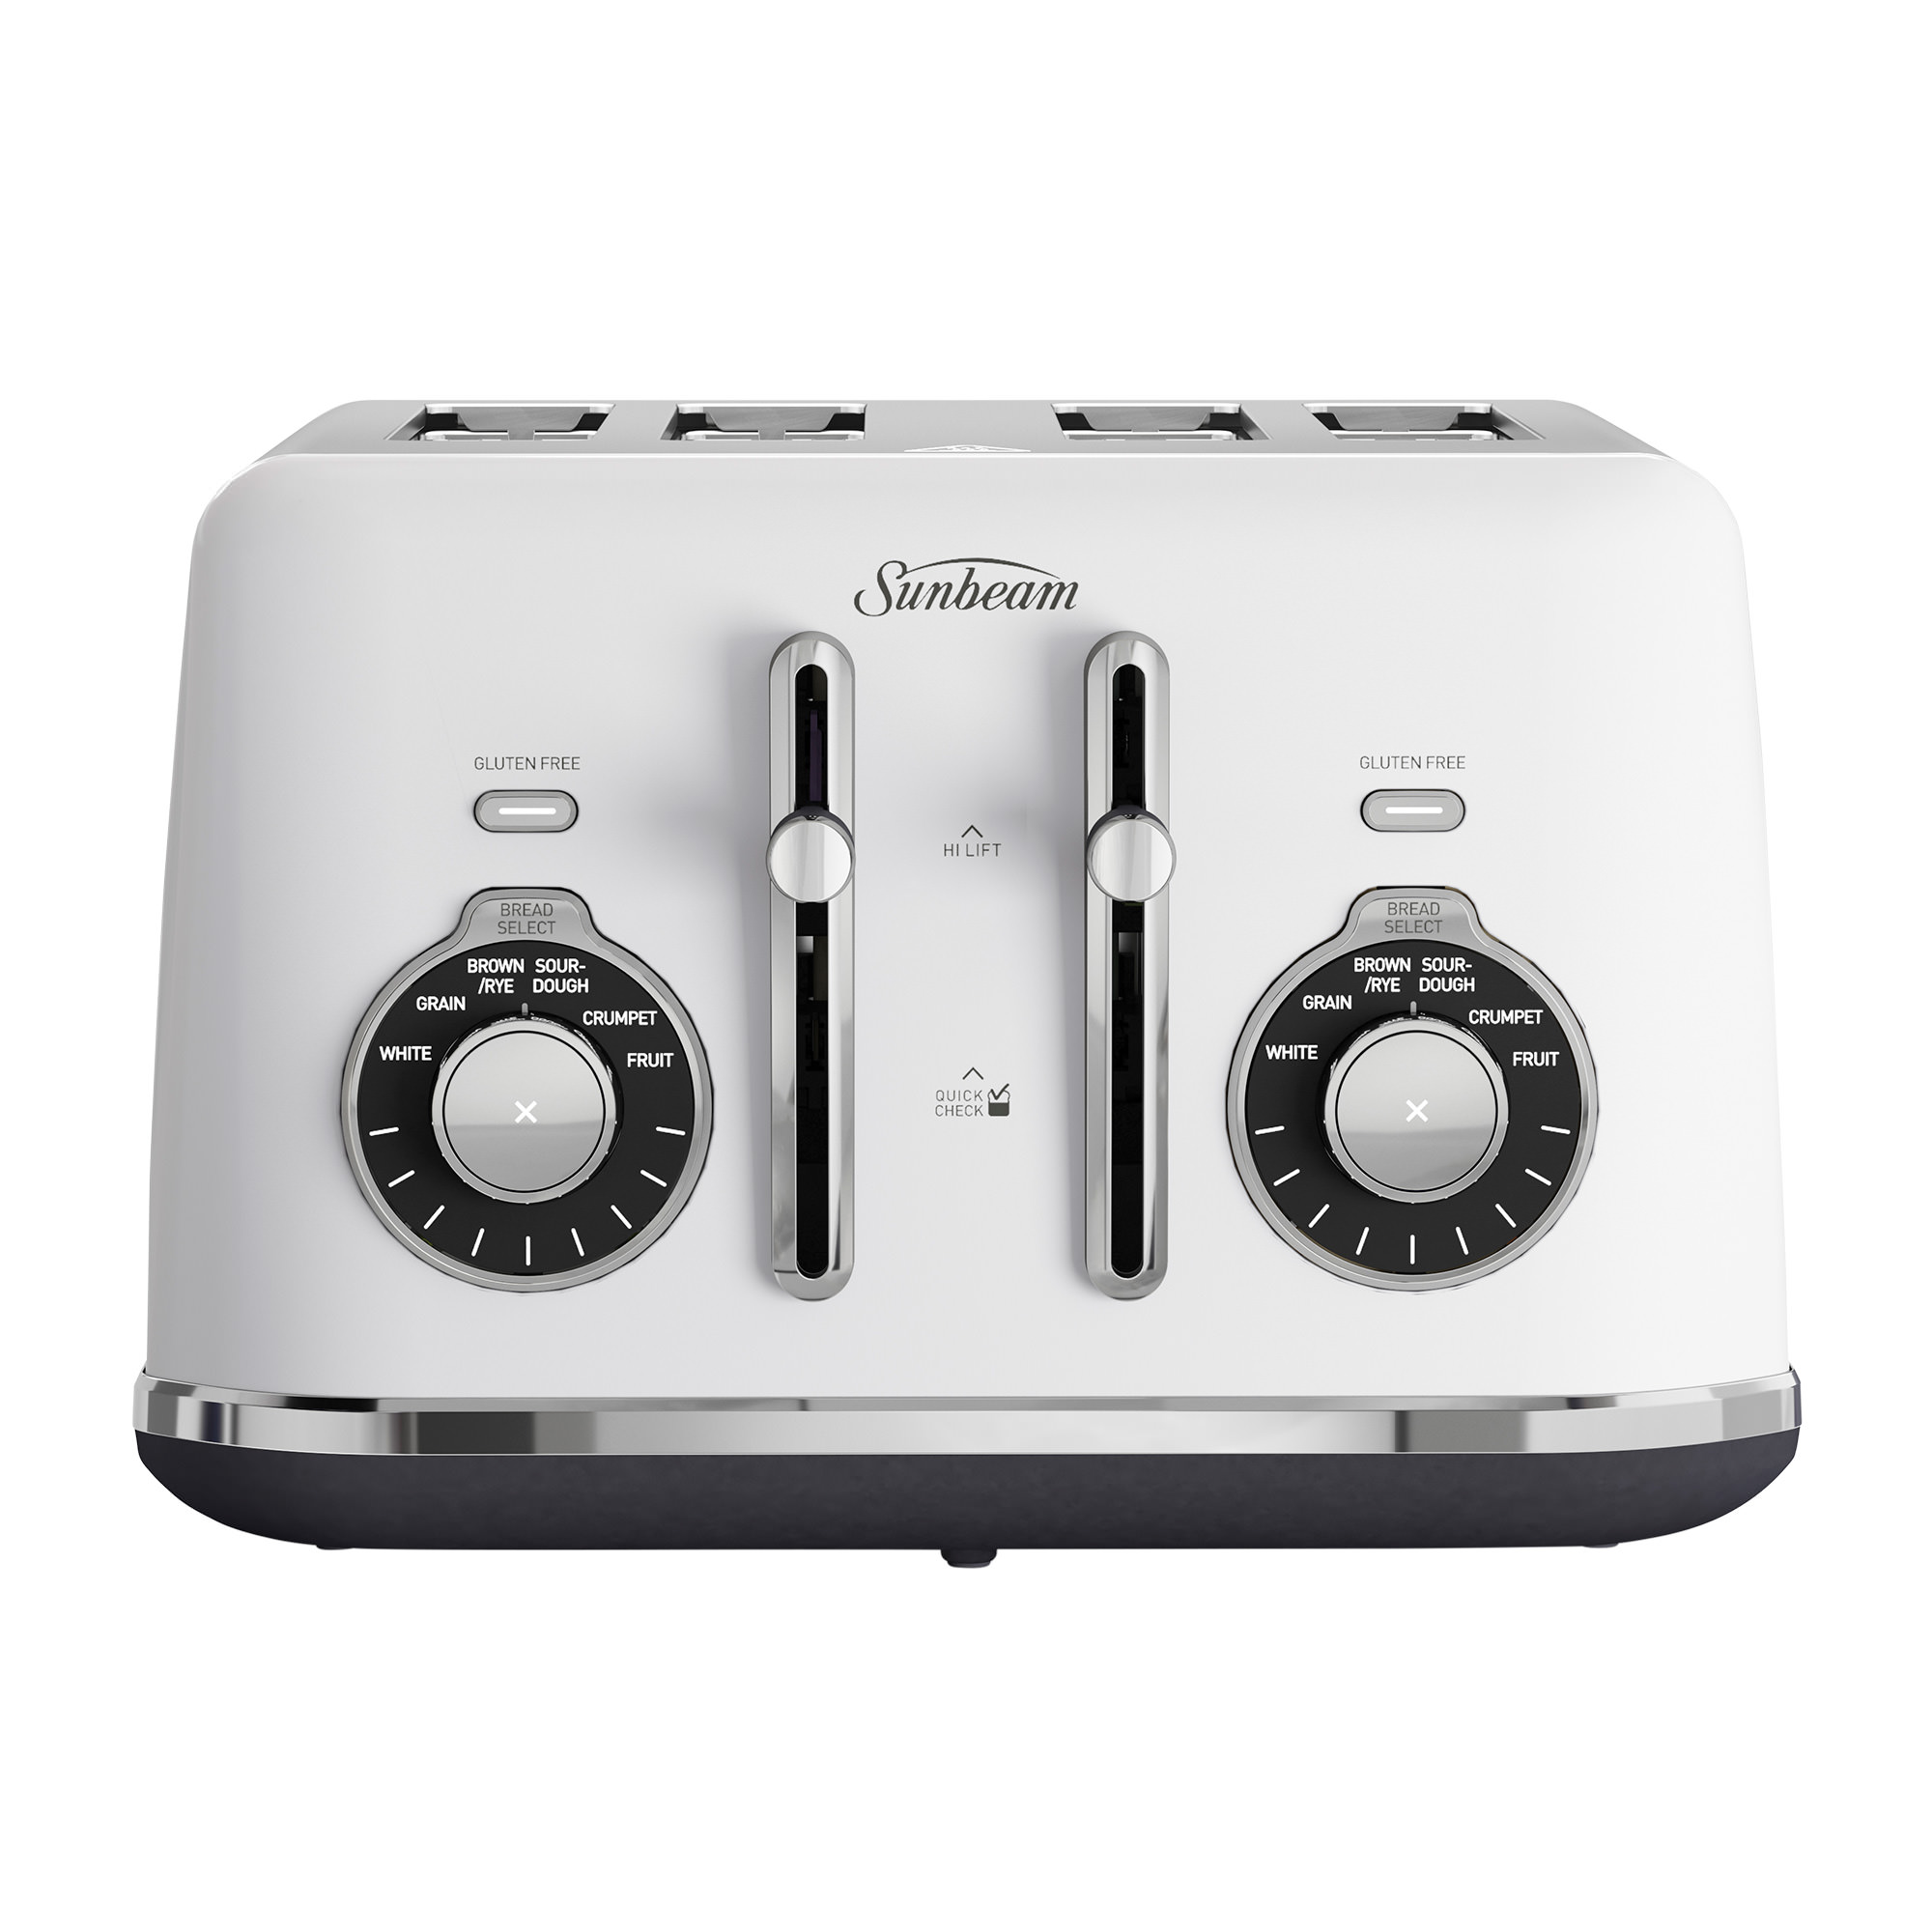 Sunbeam Alinea Select TA2840W 4 Slice Toaster Ocean Mist White Image 1